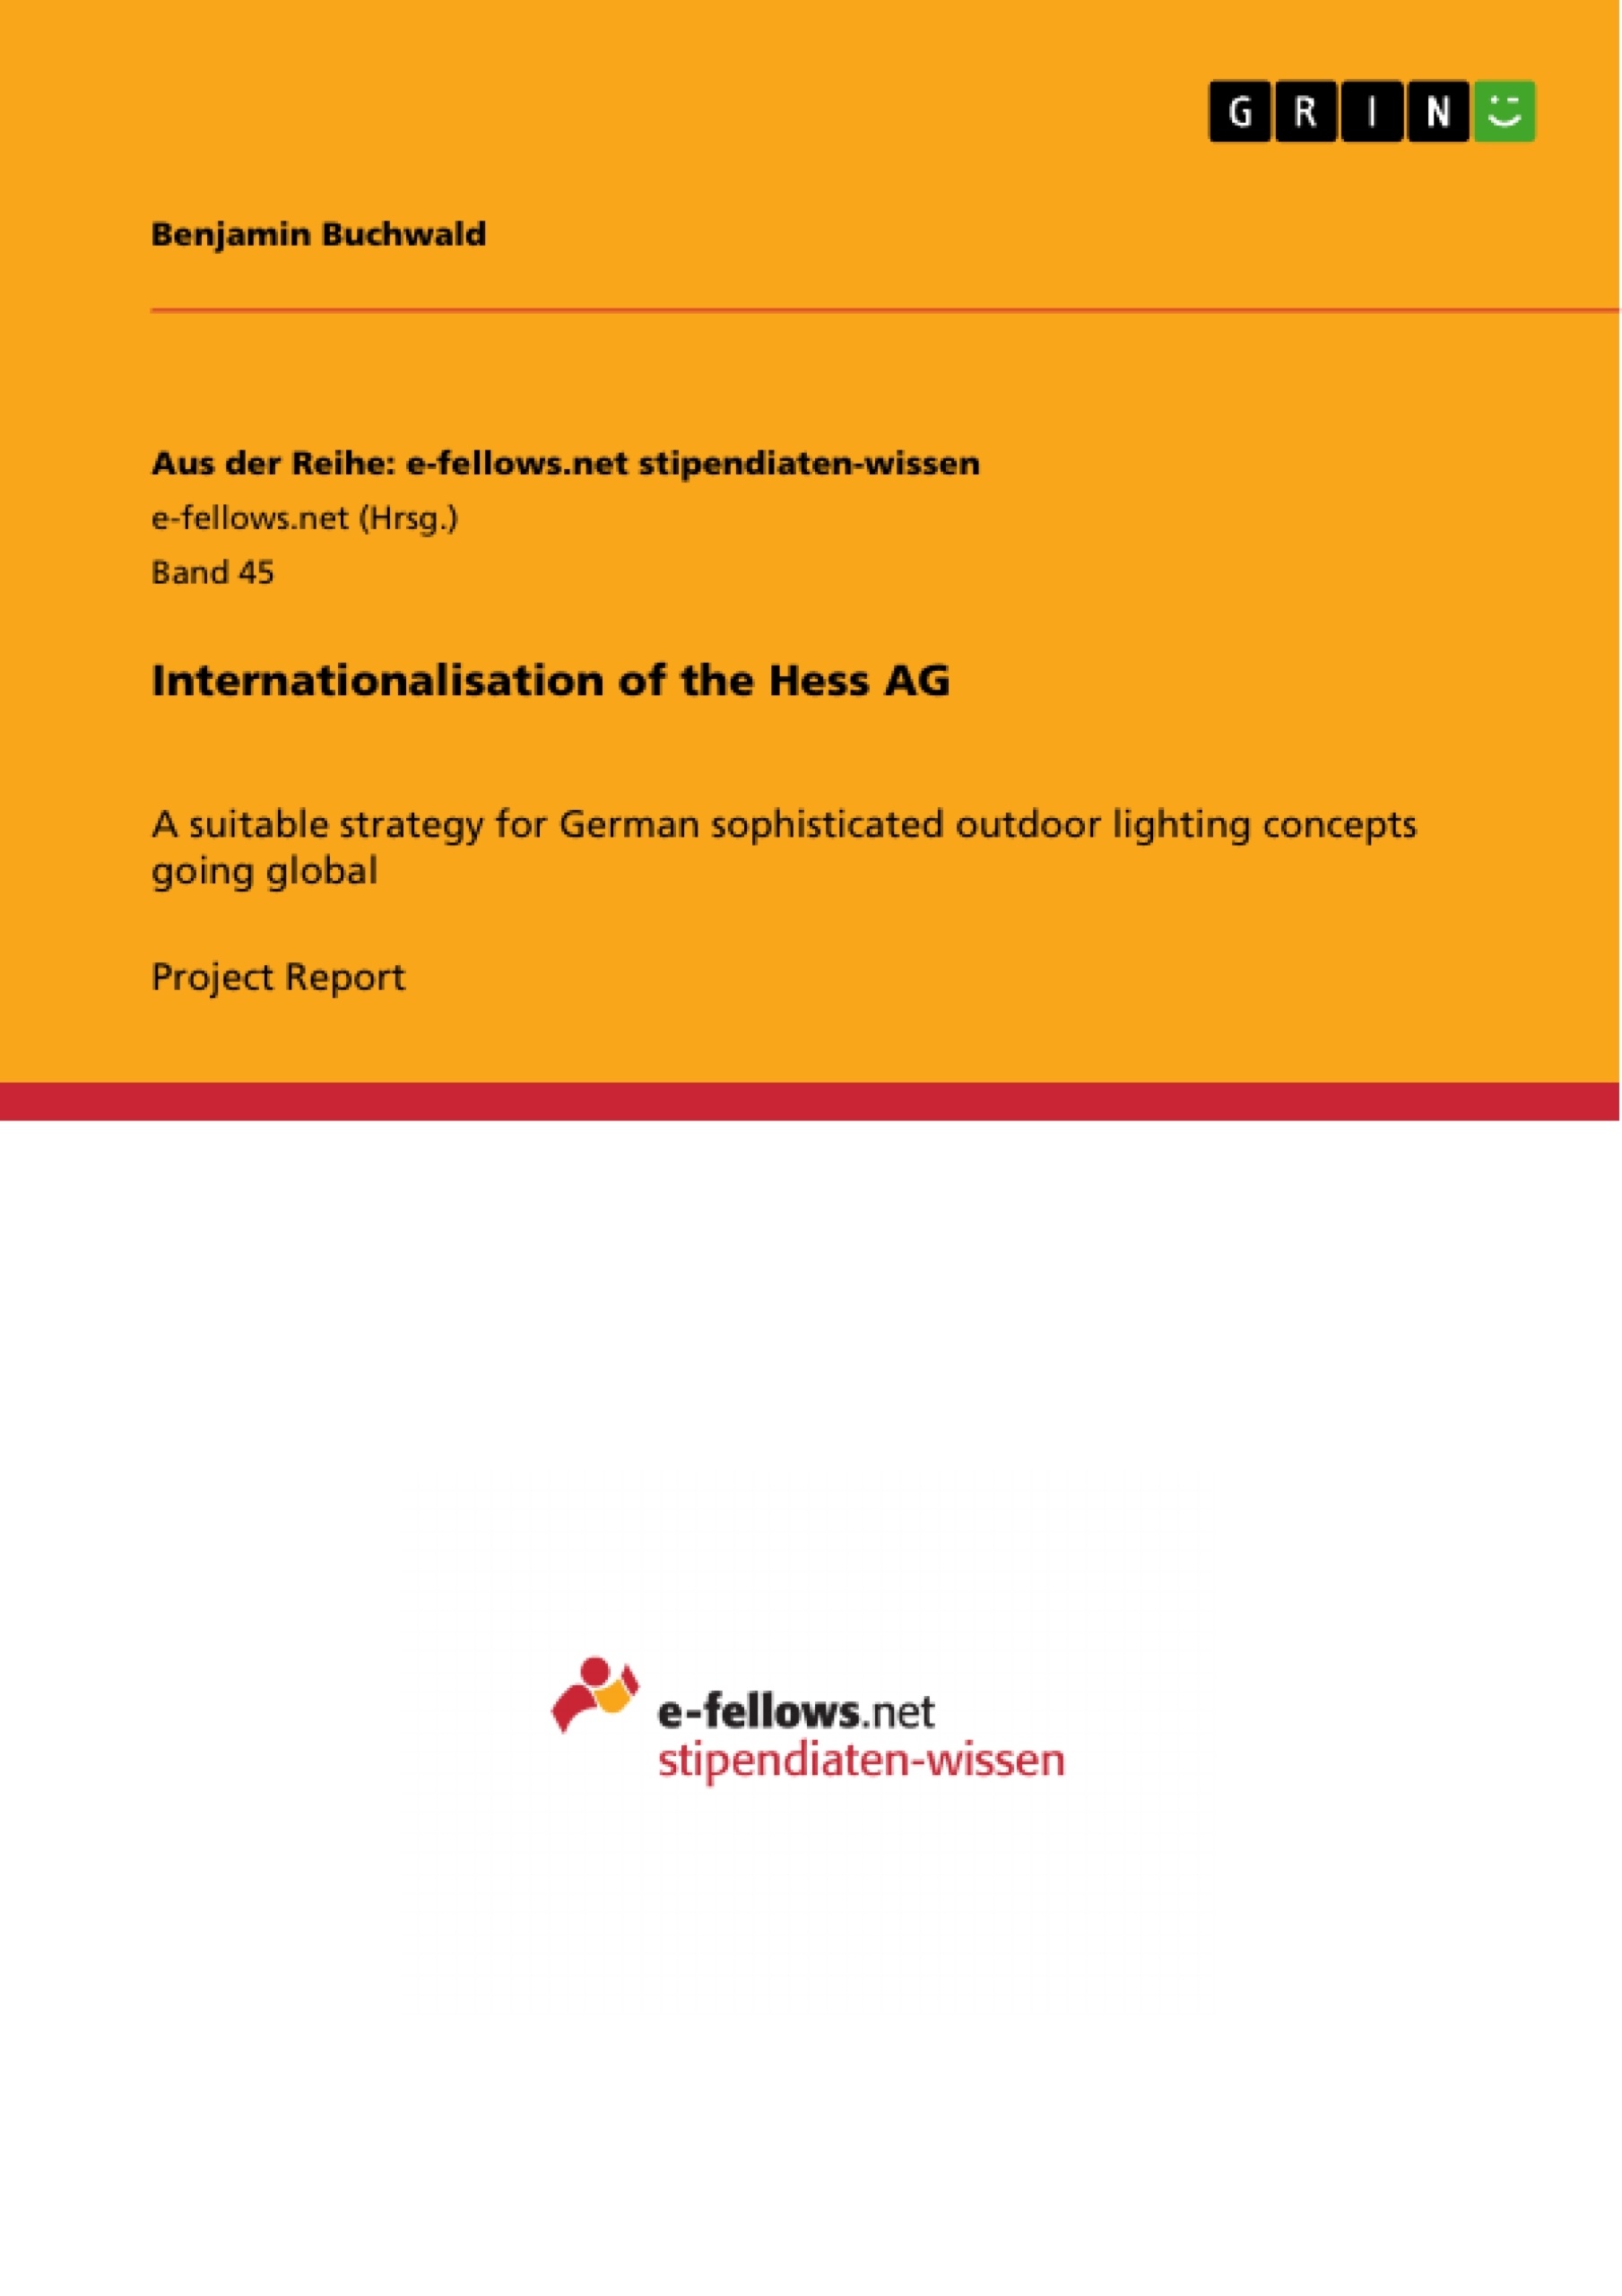 Title: Internationalisation of the Hess AG